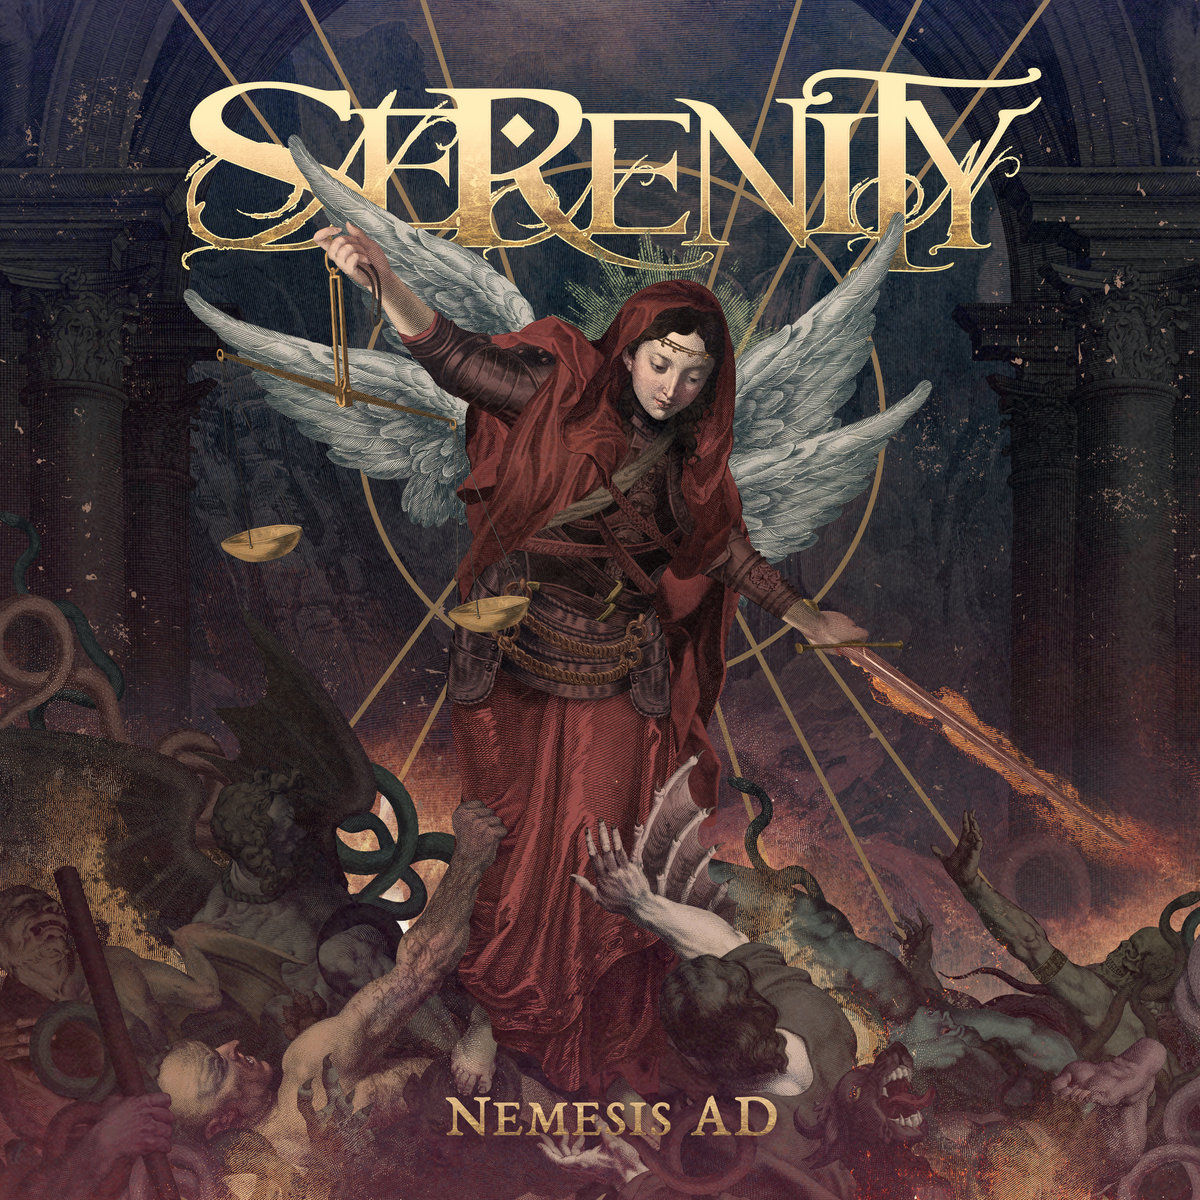 Serenity: Nemesis AD